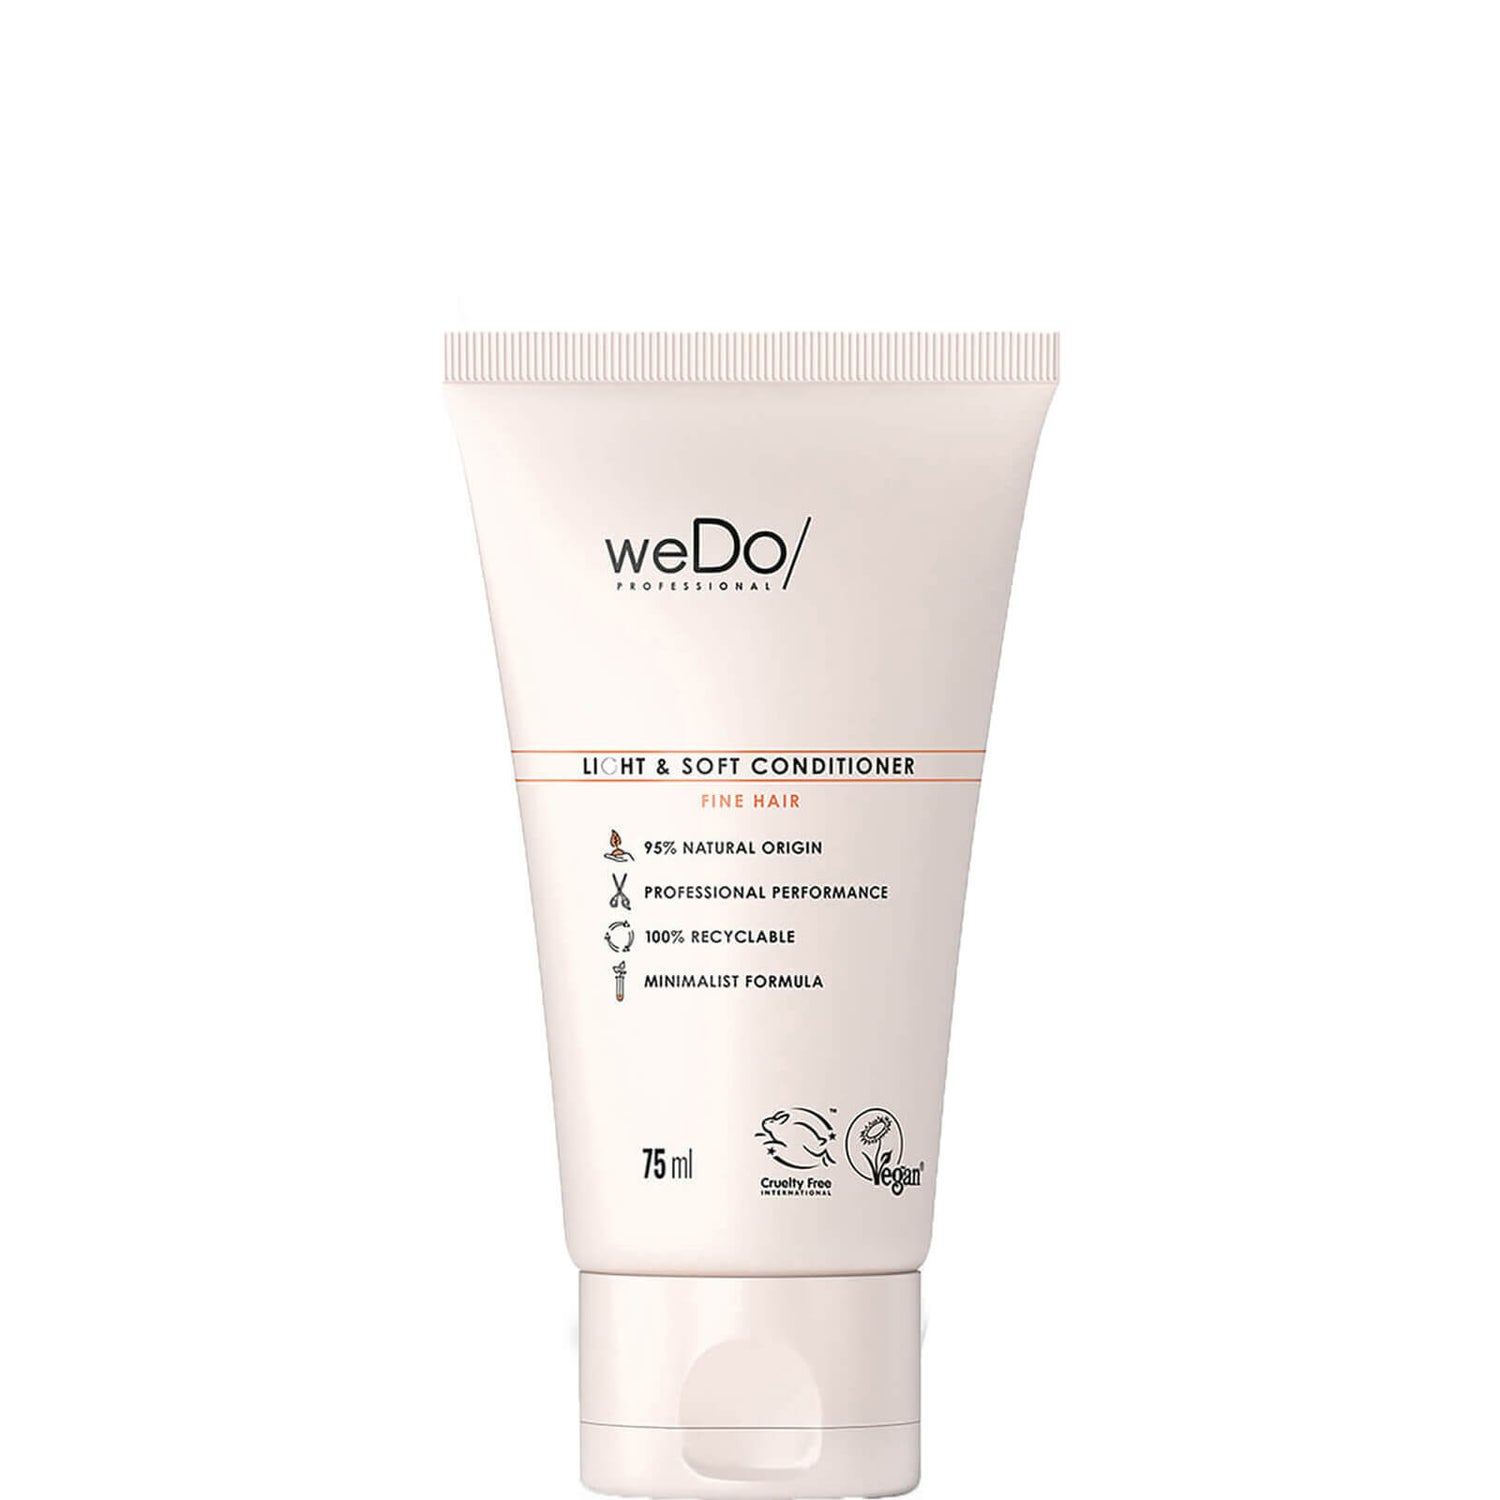 weDo/ Professional Light and Soft Conditioner 75 ml